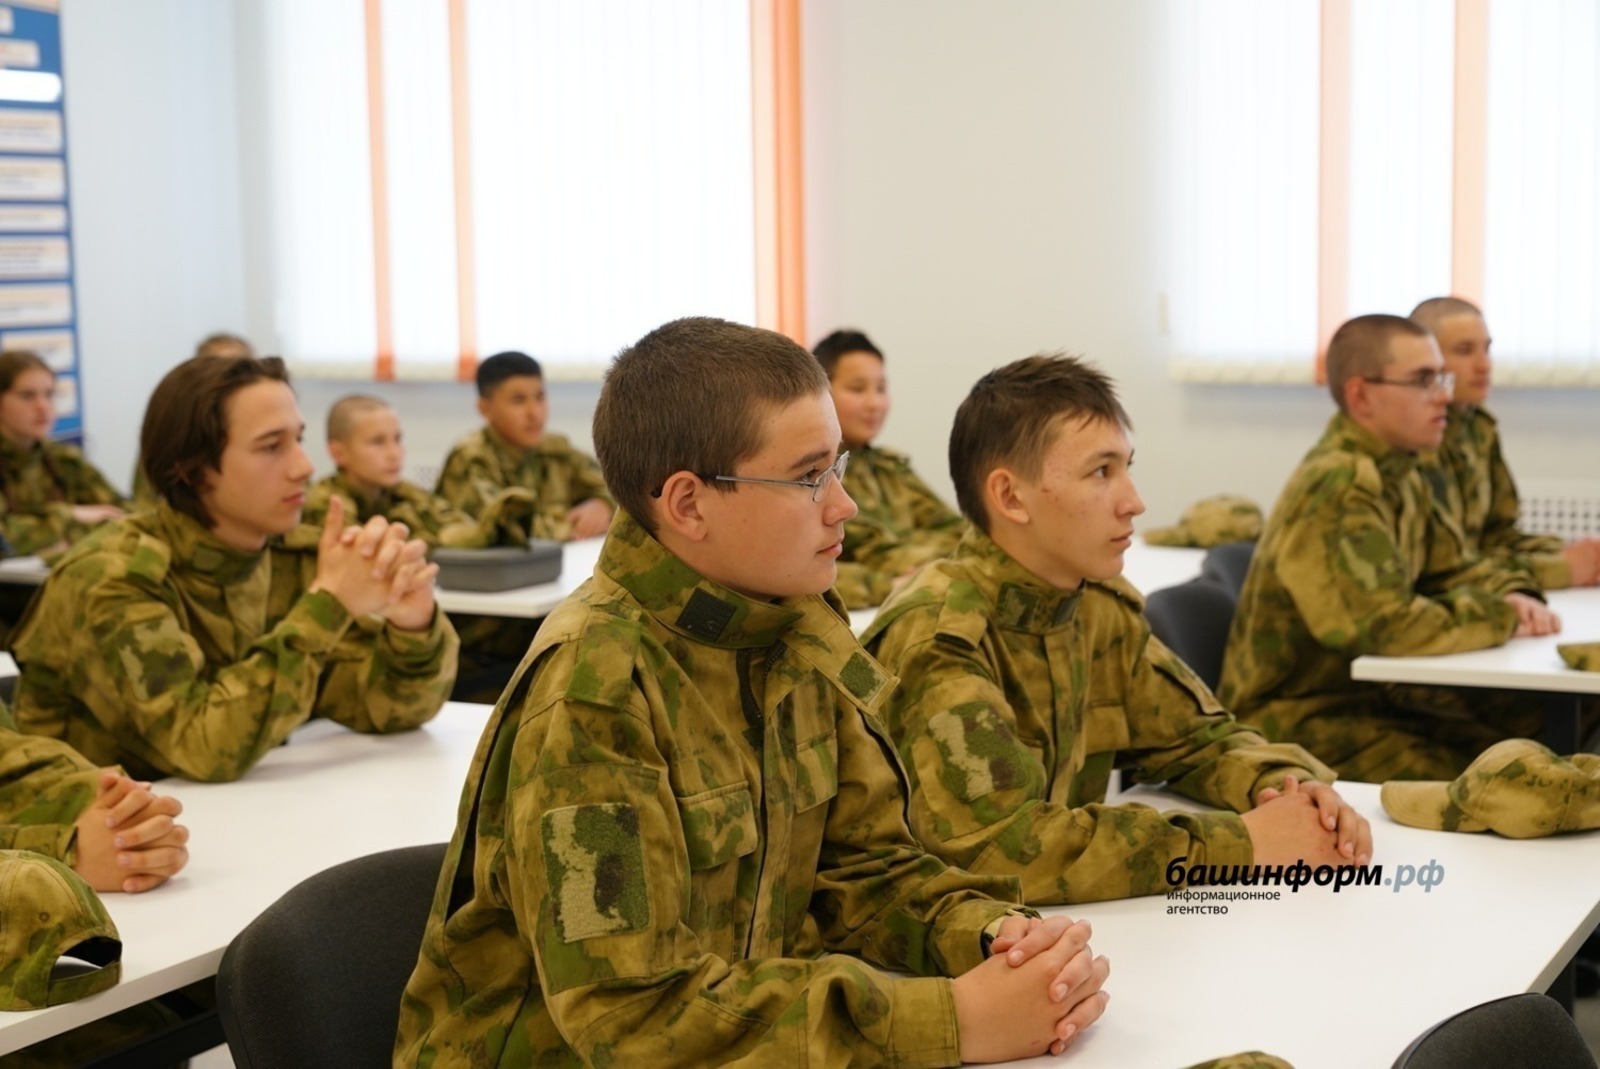 "Яңы уҡыу йылынан мәктәптәрҙә башланғыс хәрби әҙерлек буйынса курс индерелә"